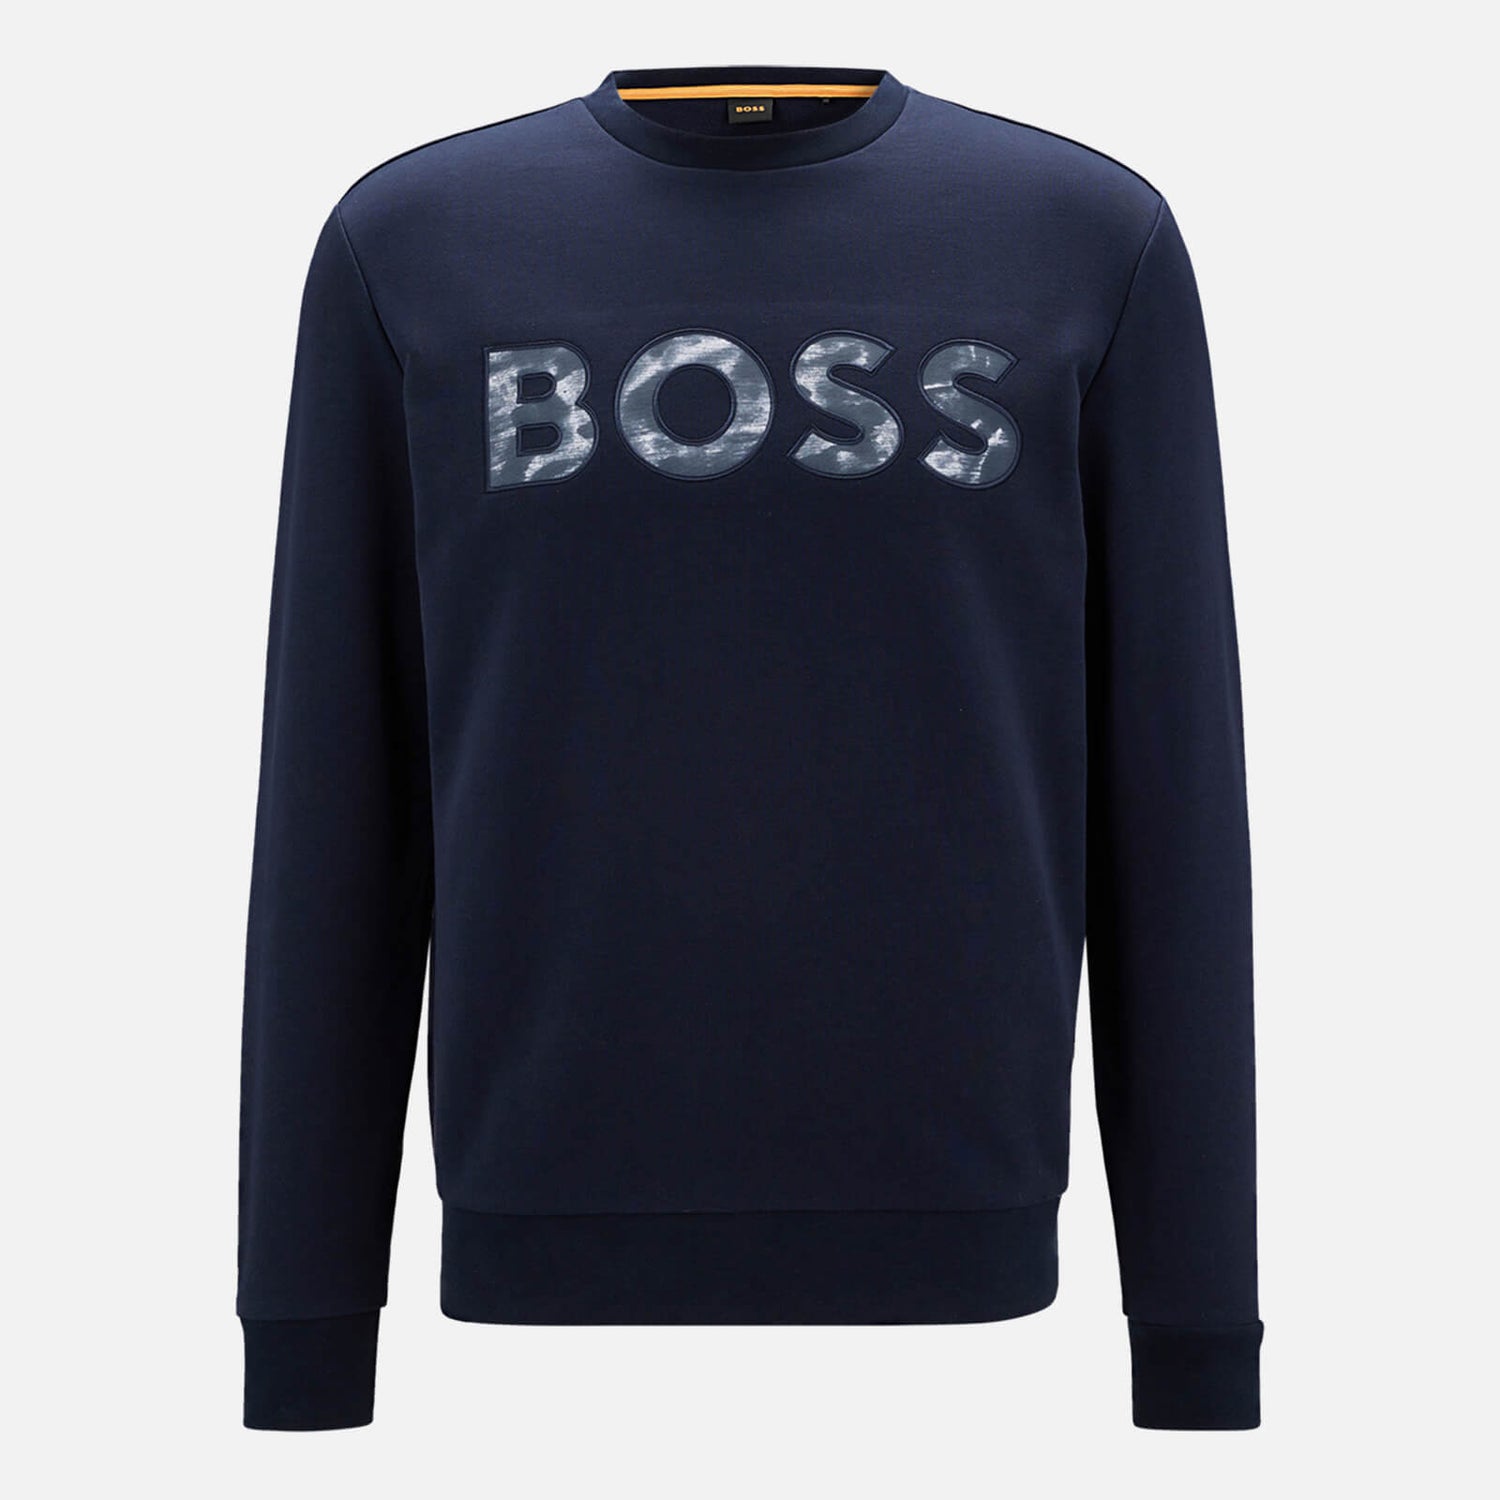 BOSS Orange Weboss Cotton Sweatshirt